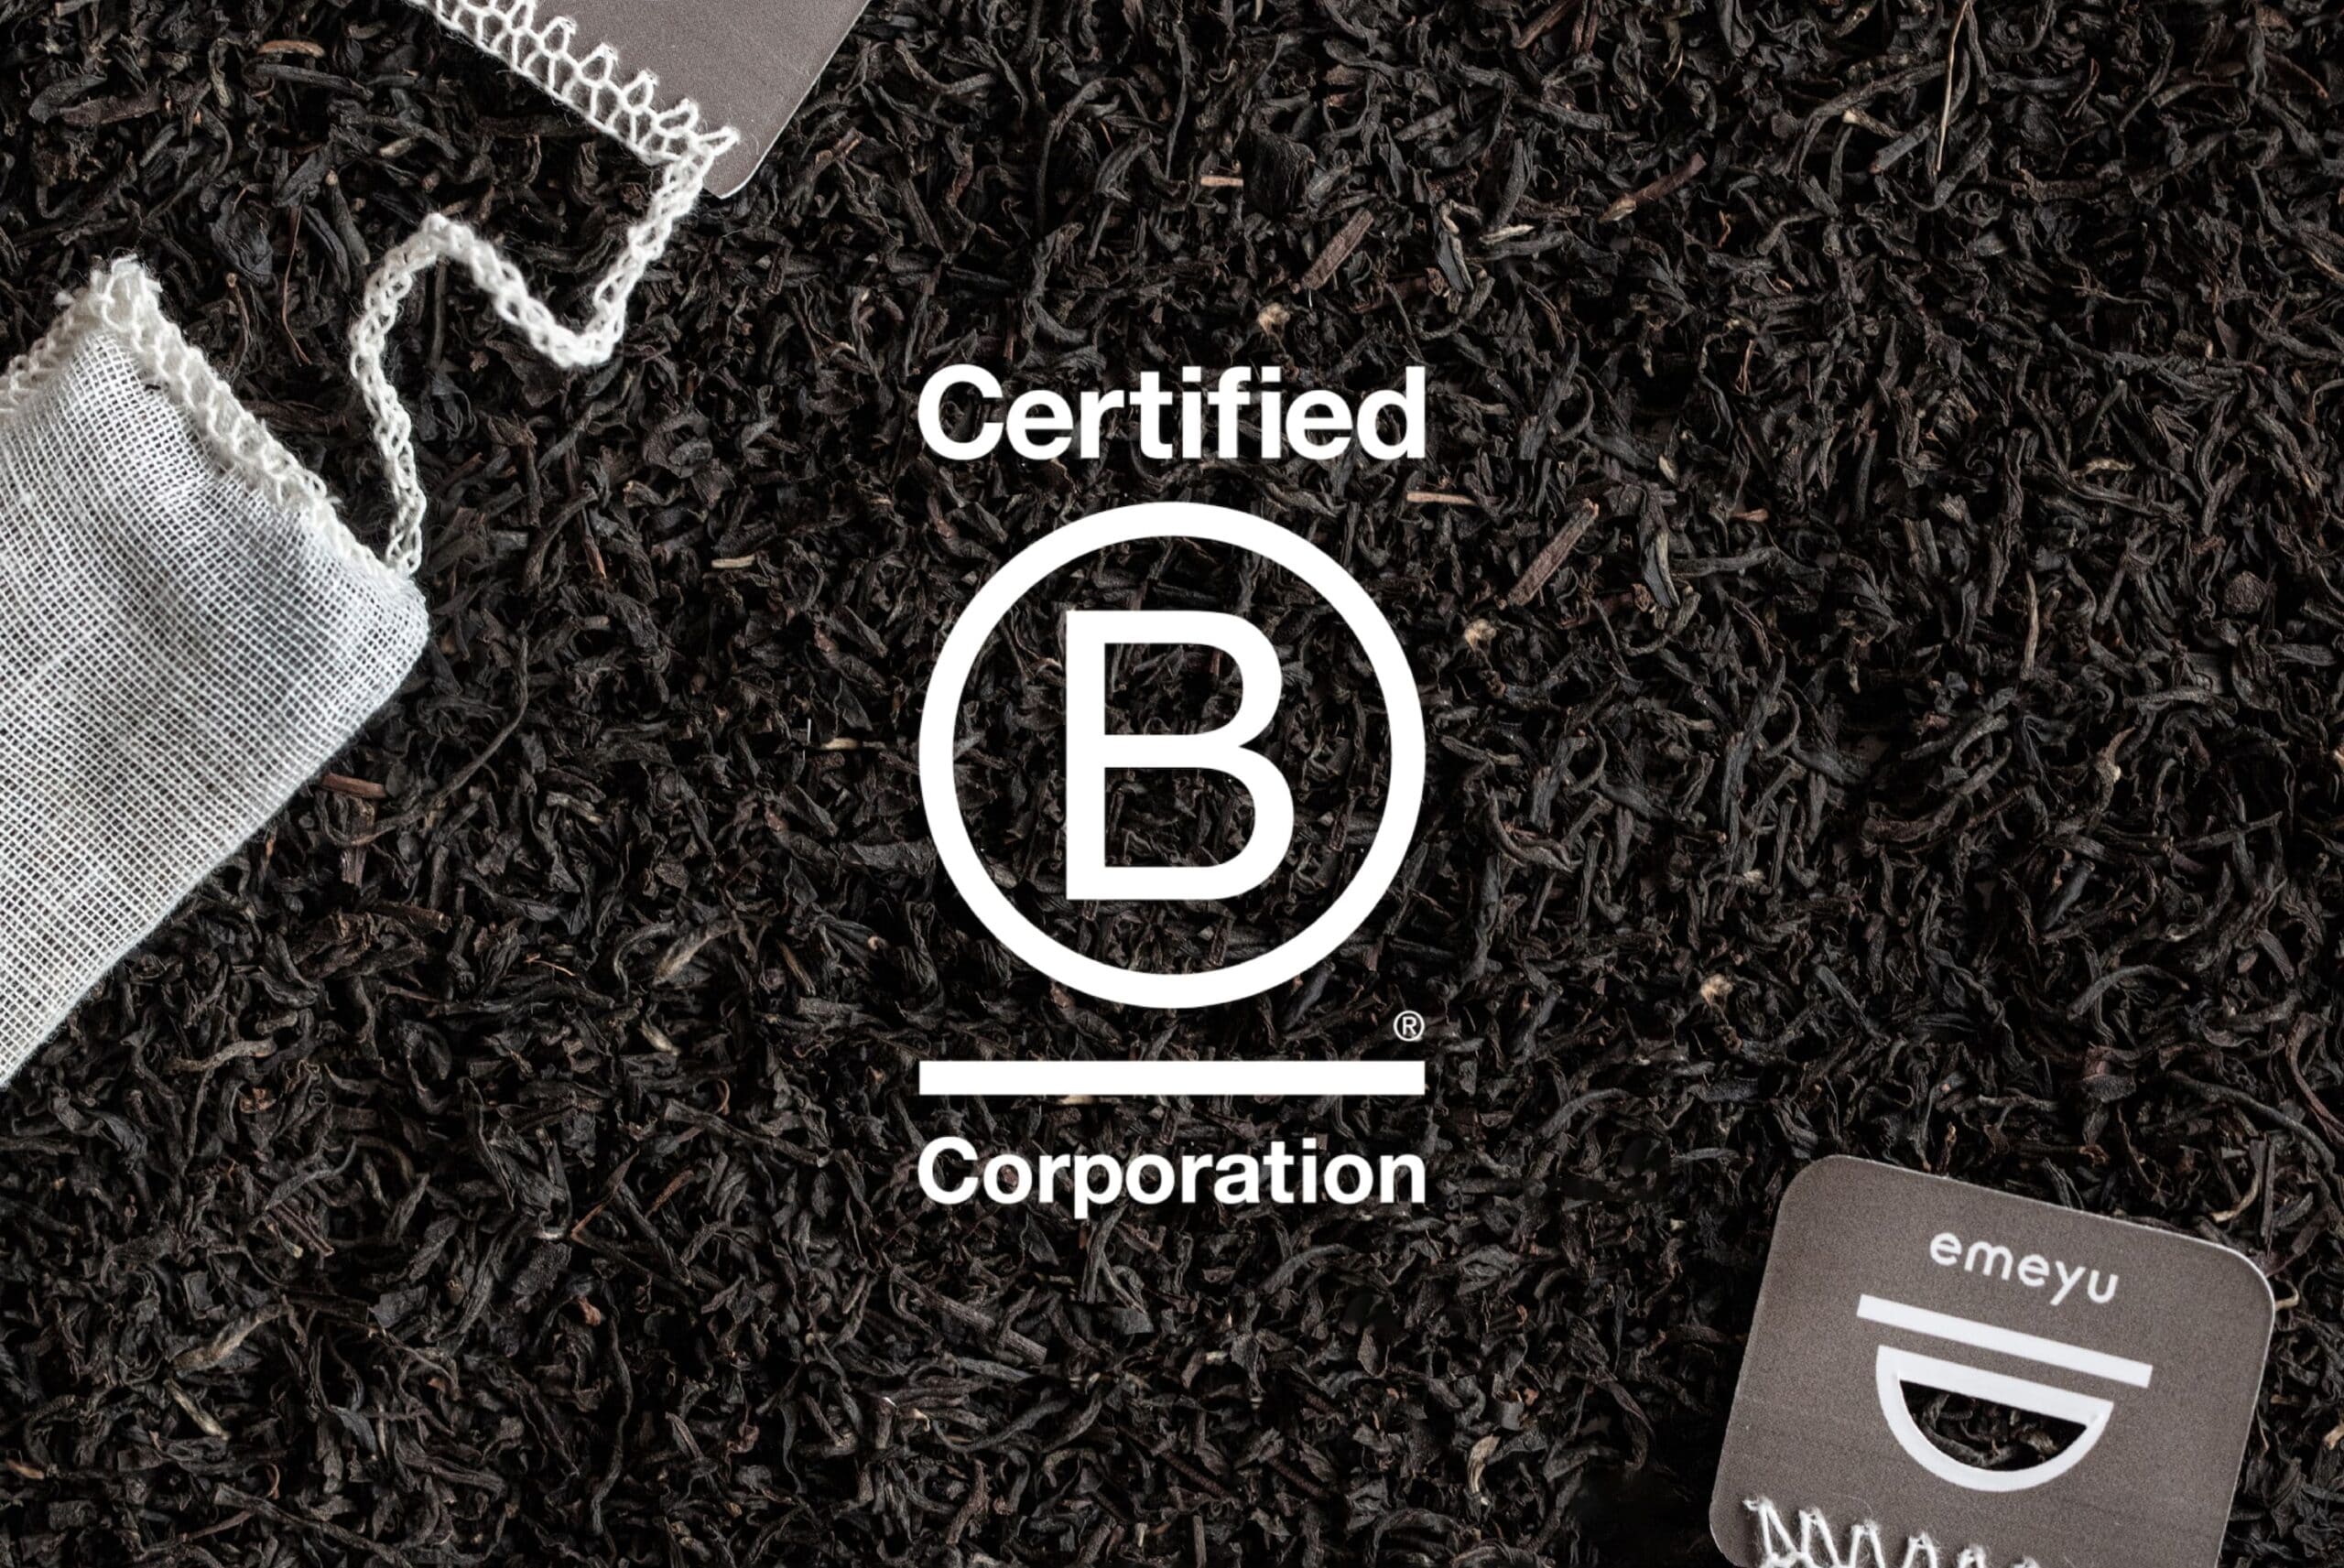 Emeyu is B Corp Certified.